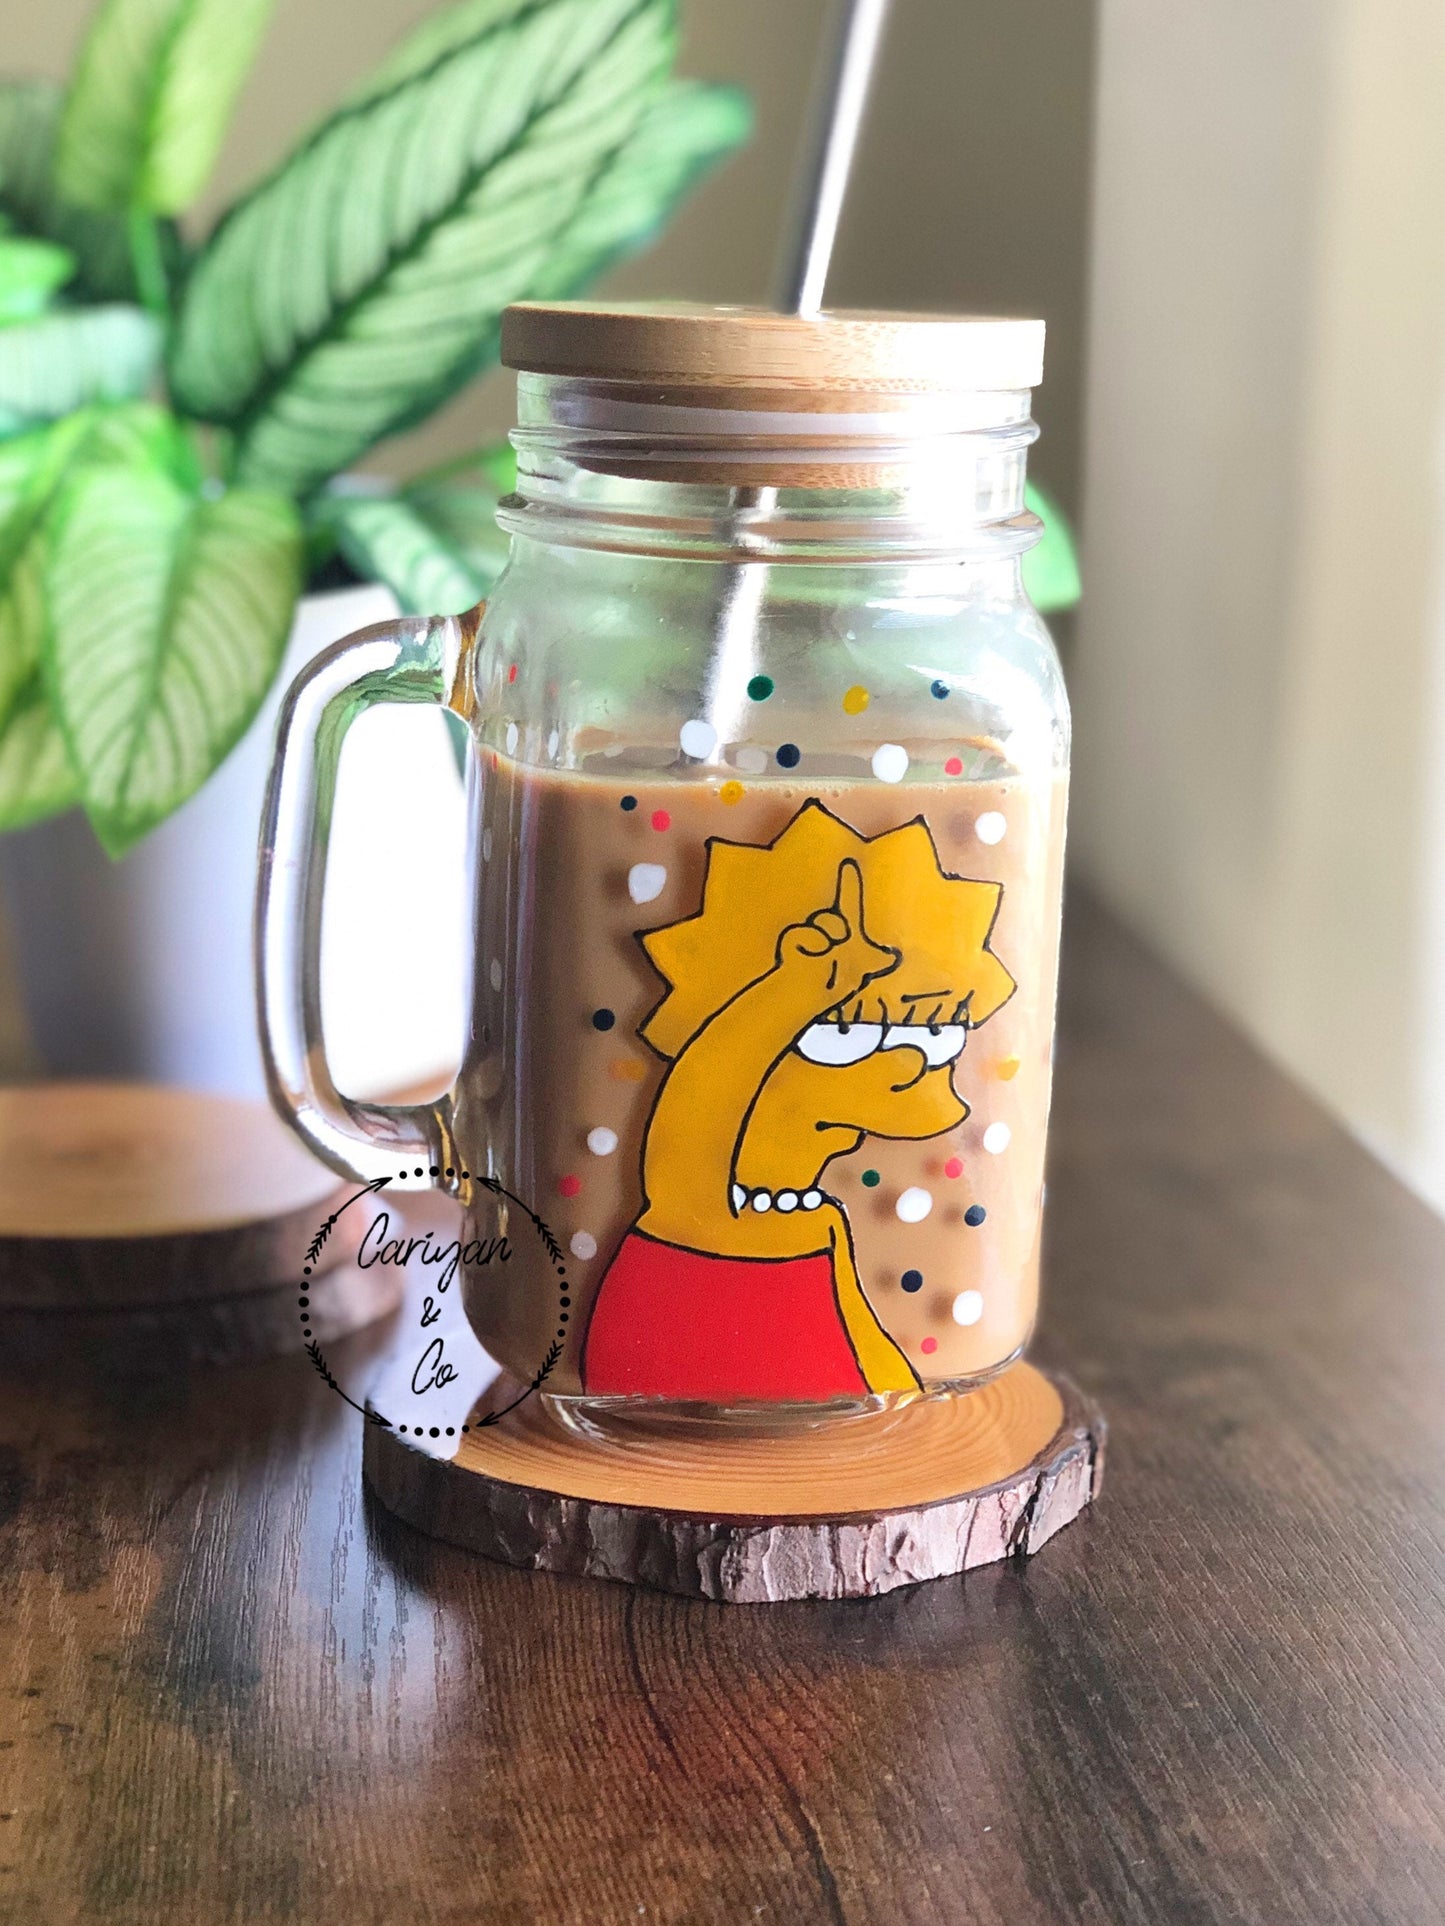 Cartoon Animated Glass Coffee Mug, Iced Coffee Cup, Glass Cup, Travel Mug Cup, Hand Painted Glasses, Personal Mug Cup